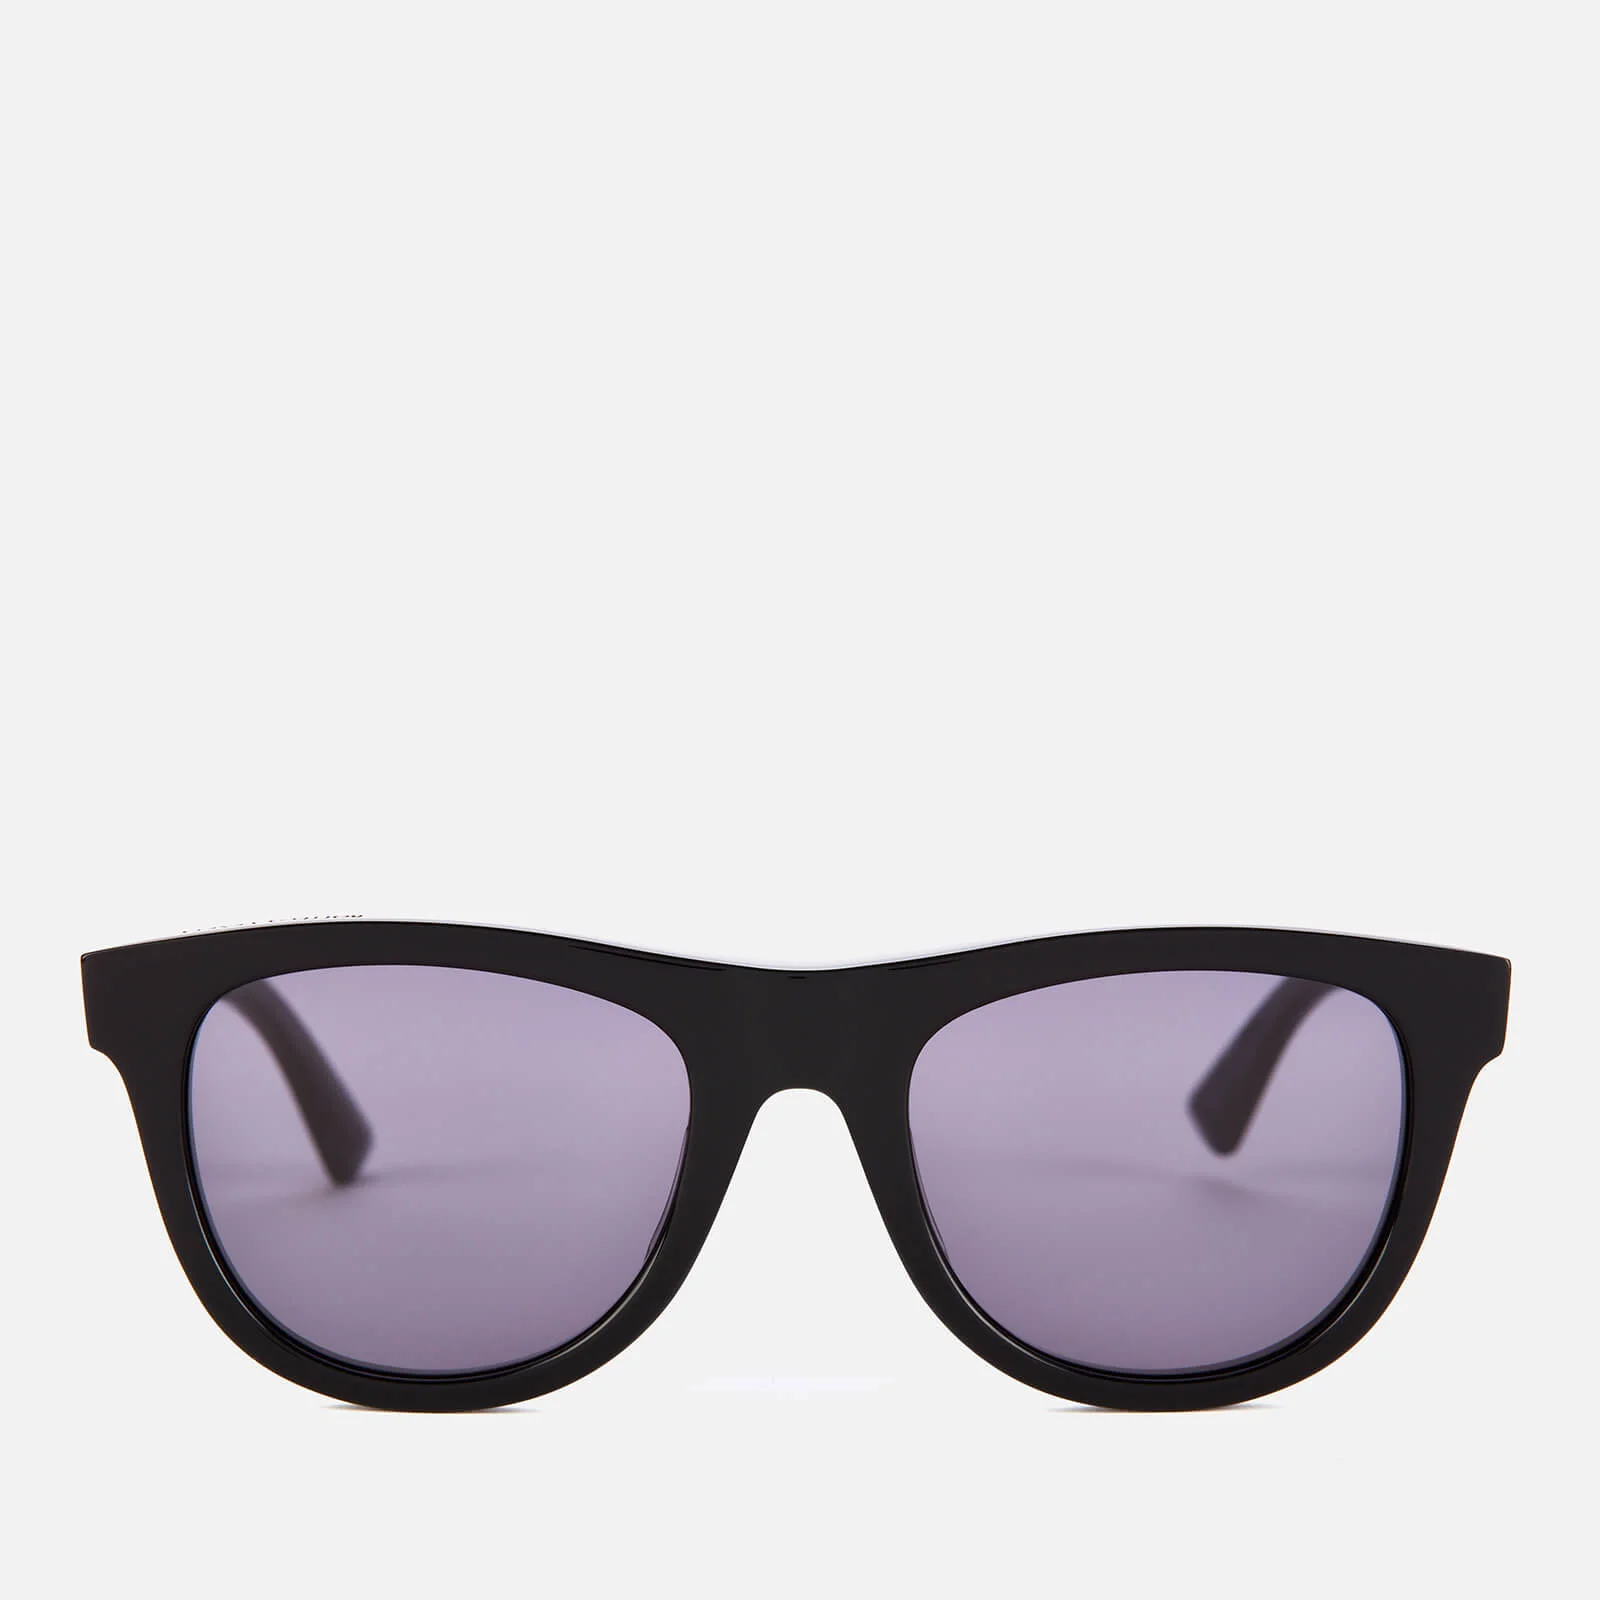 Bottega Veneta Women's D-Frame Acetate Sunglasses - Black/Grey Image 1